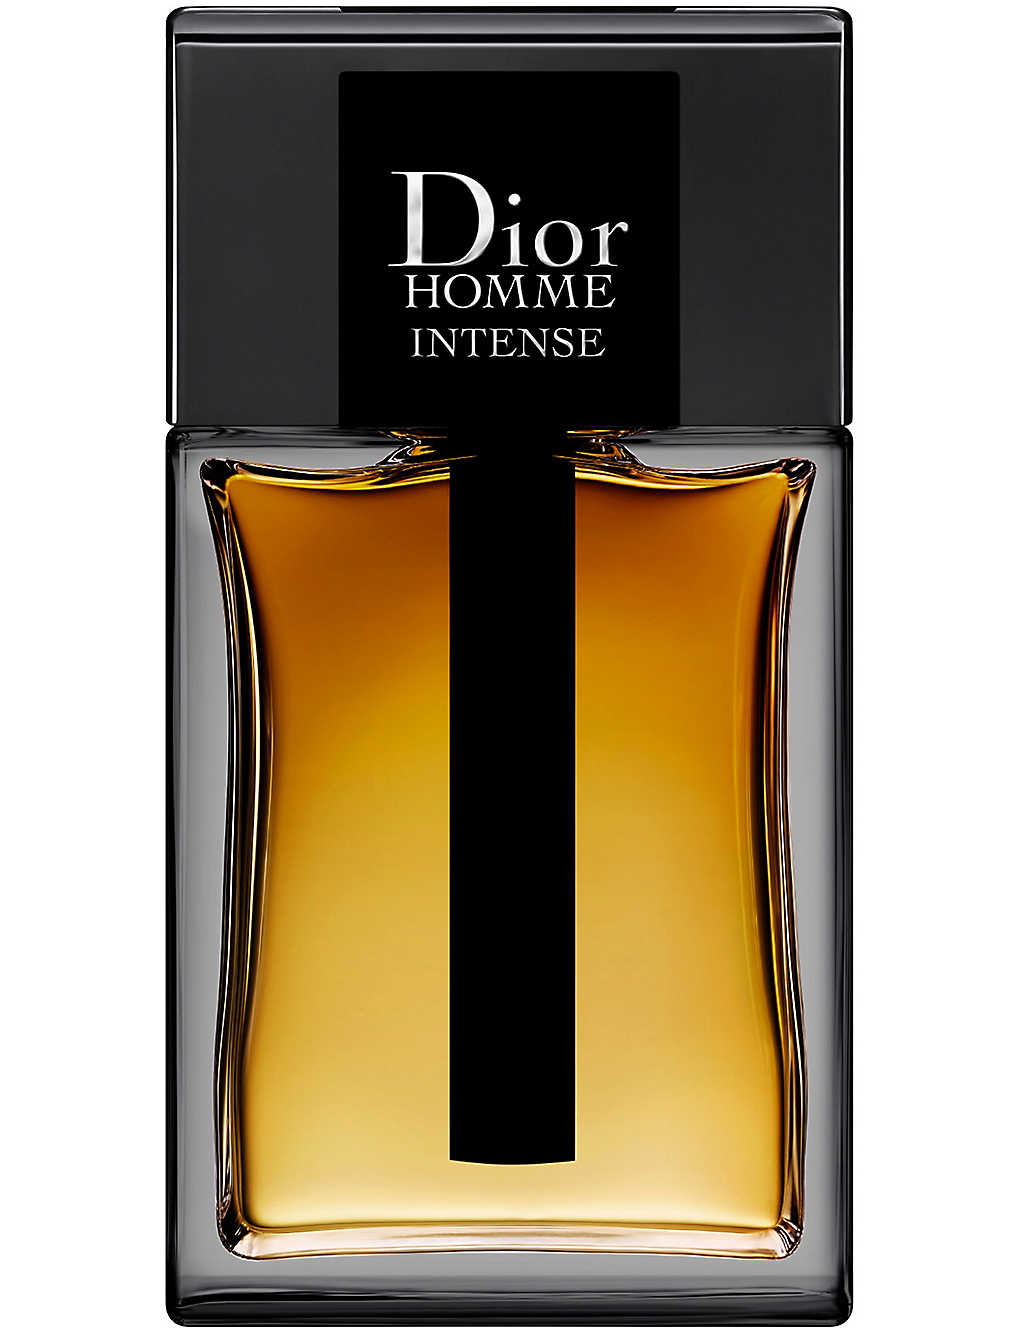 Dior Homme Intense Eau De Parfum Spray 50ml